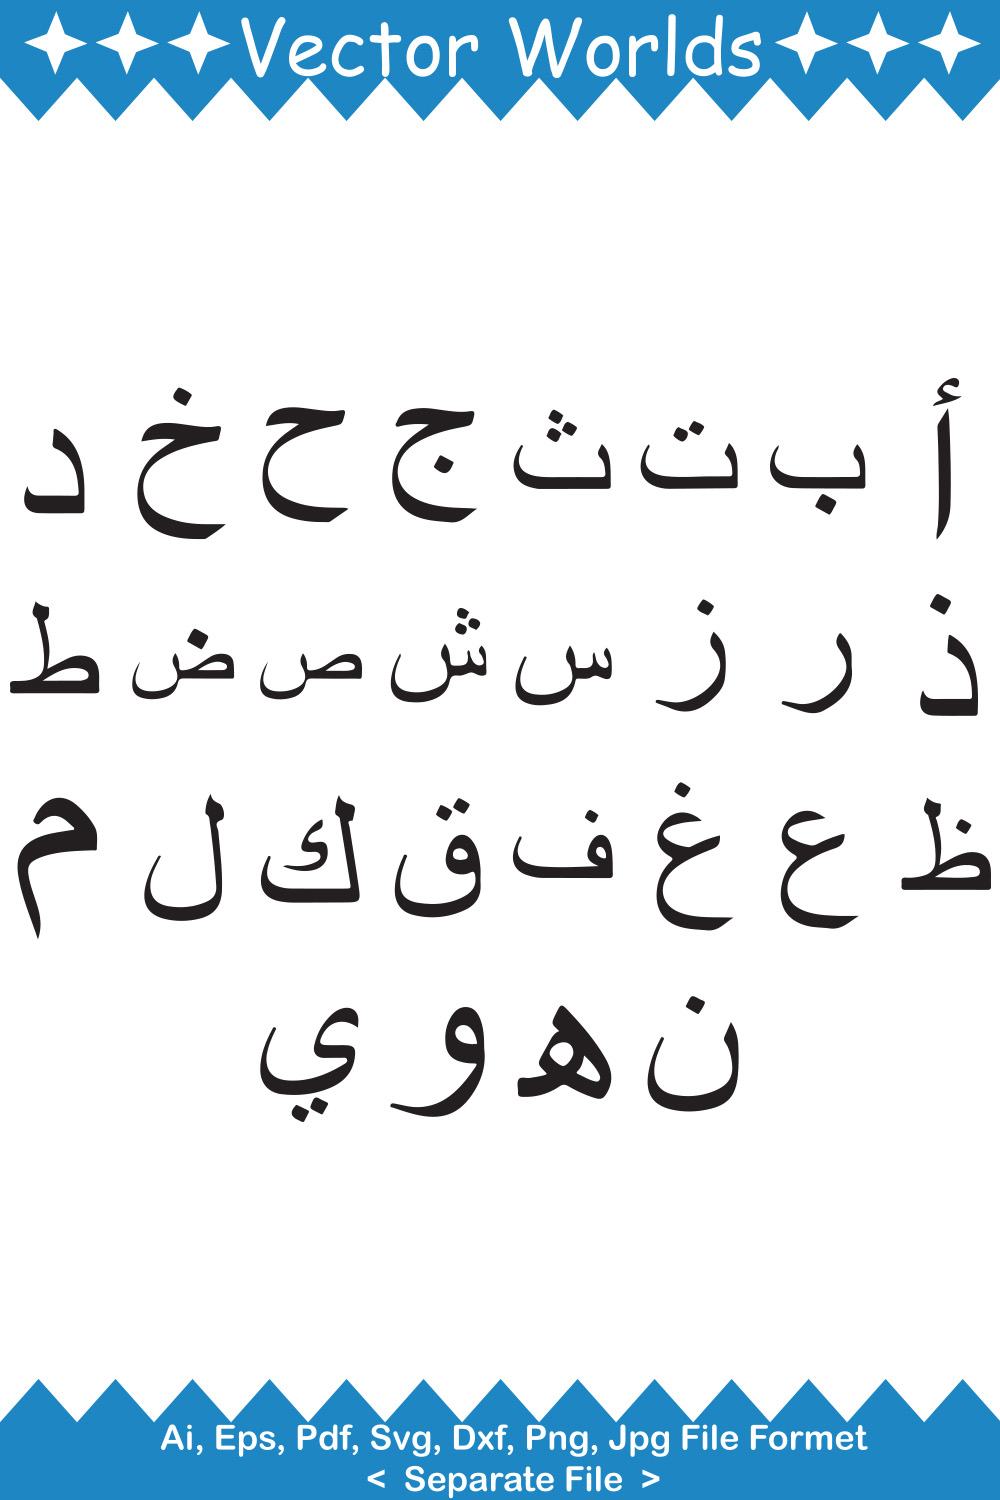 Wonderful vector image of the Arabic alphabet.